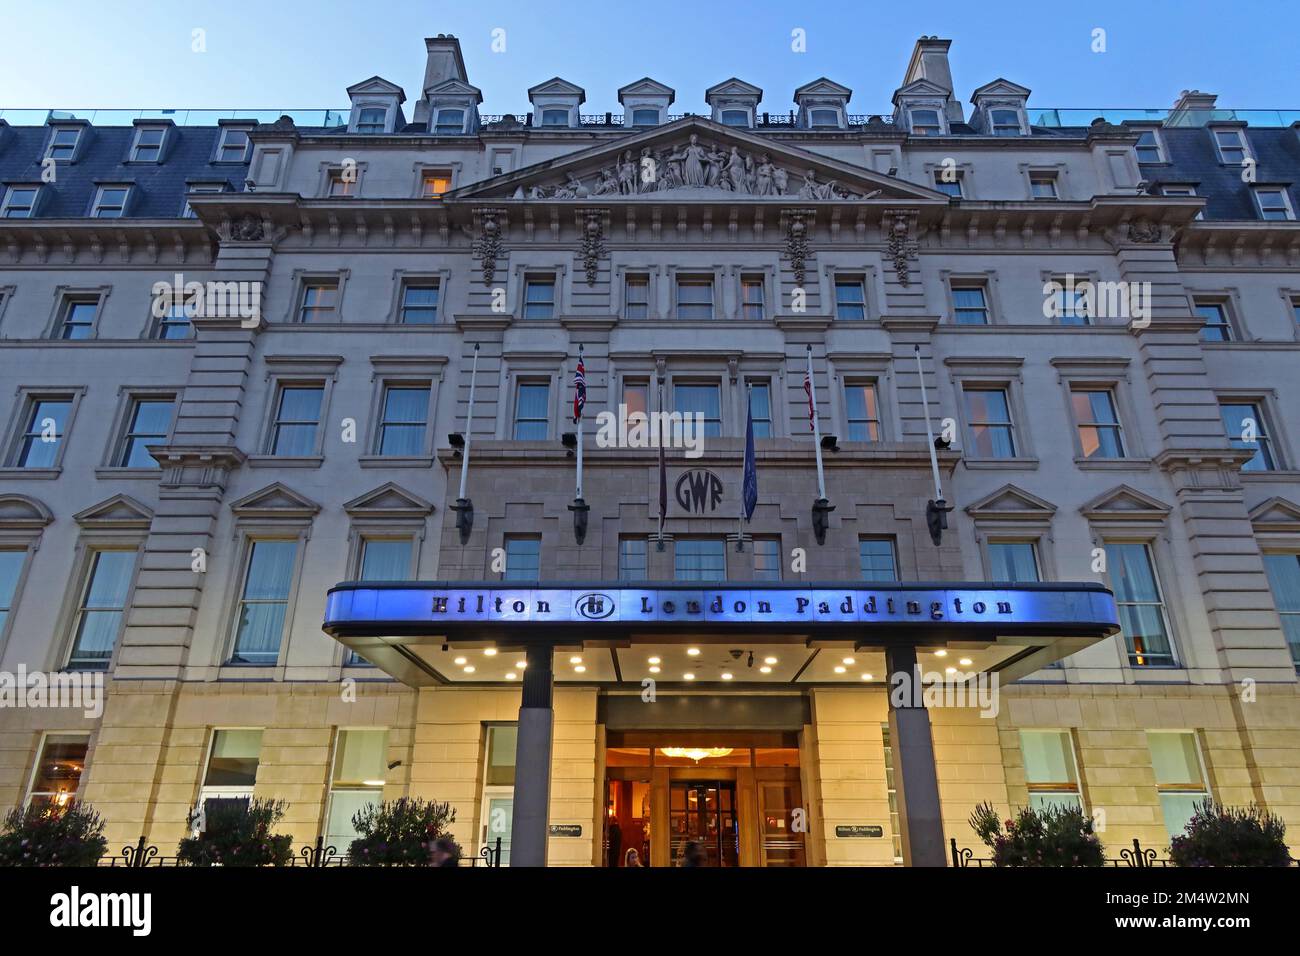 Le Hilton London Paddington, anciennement le Great Western Royal Hotel, 146 Praed St, Paddington, Bloomsbury, Londres, Angleterre, ROYAUME-UNI, W2 1EE Banque D'Images